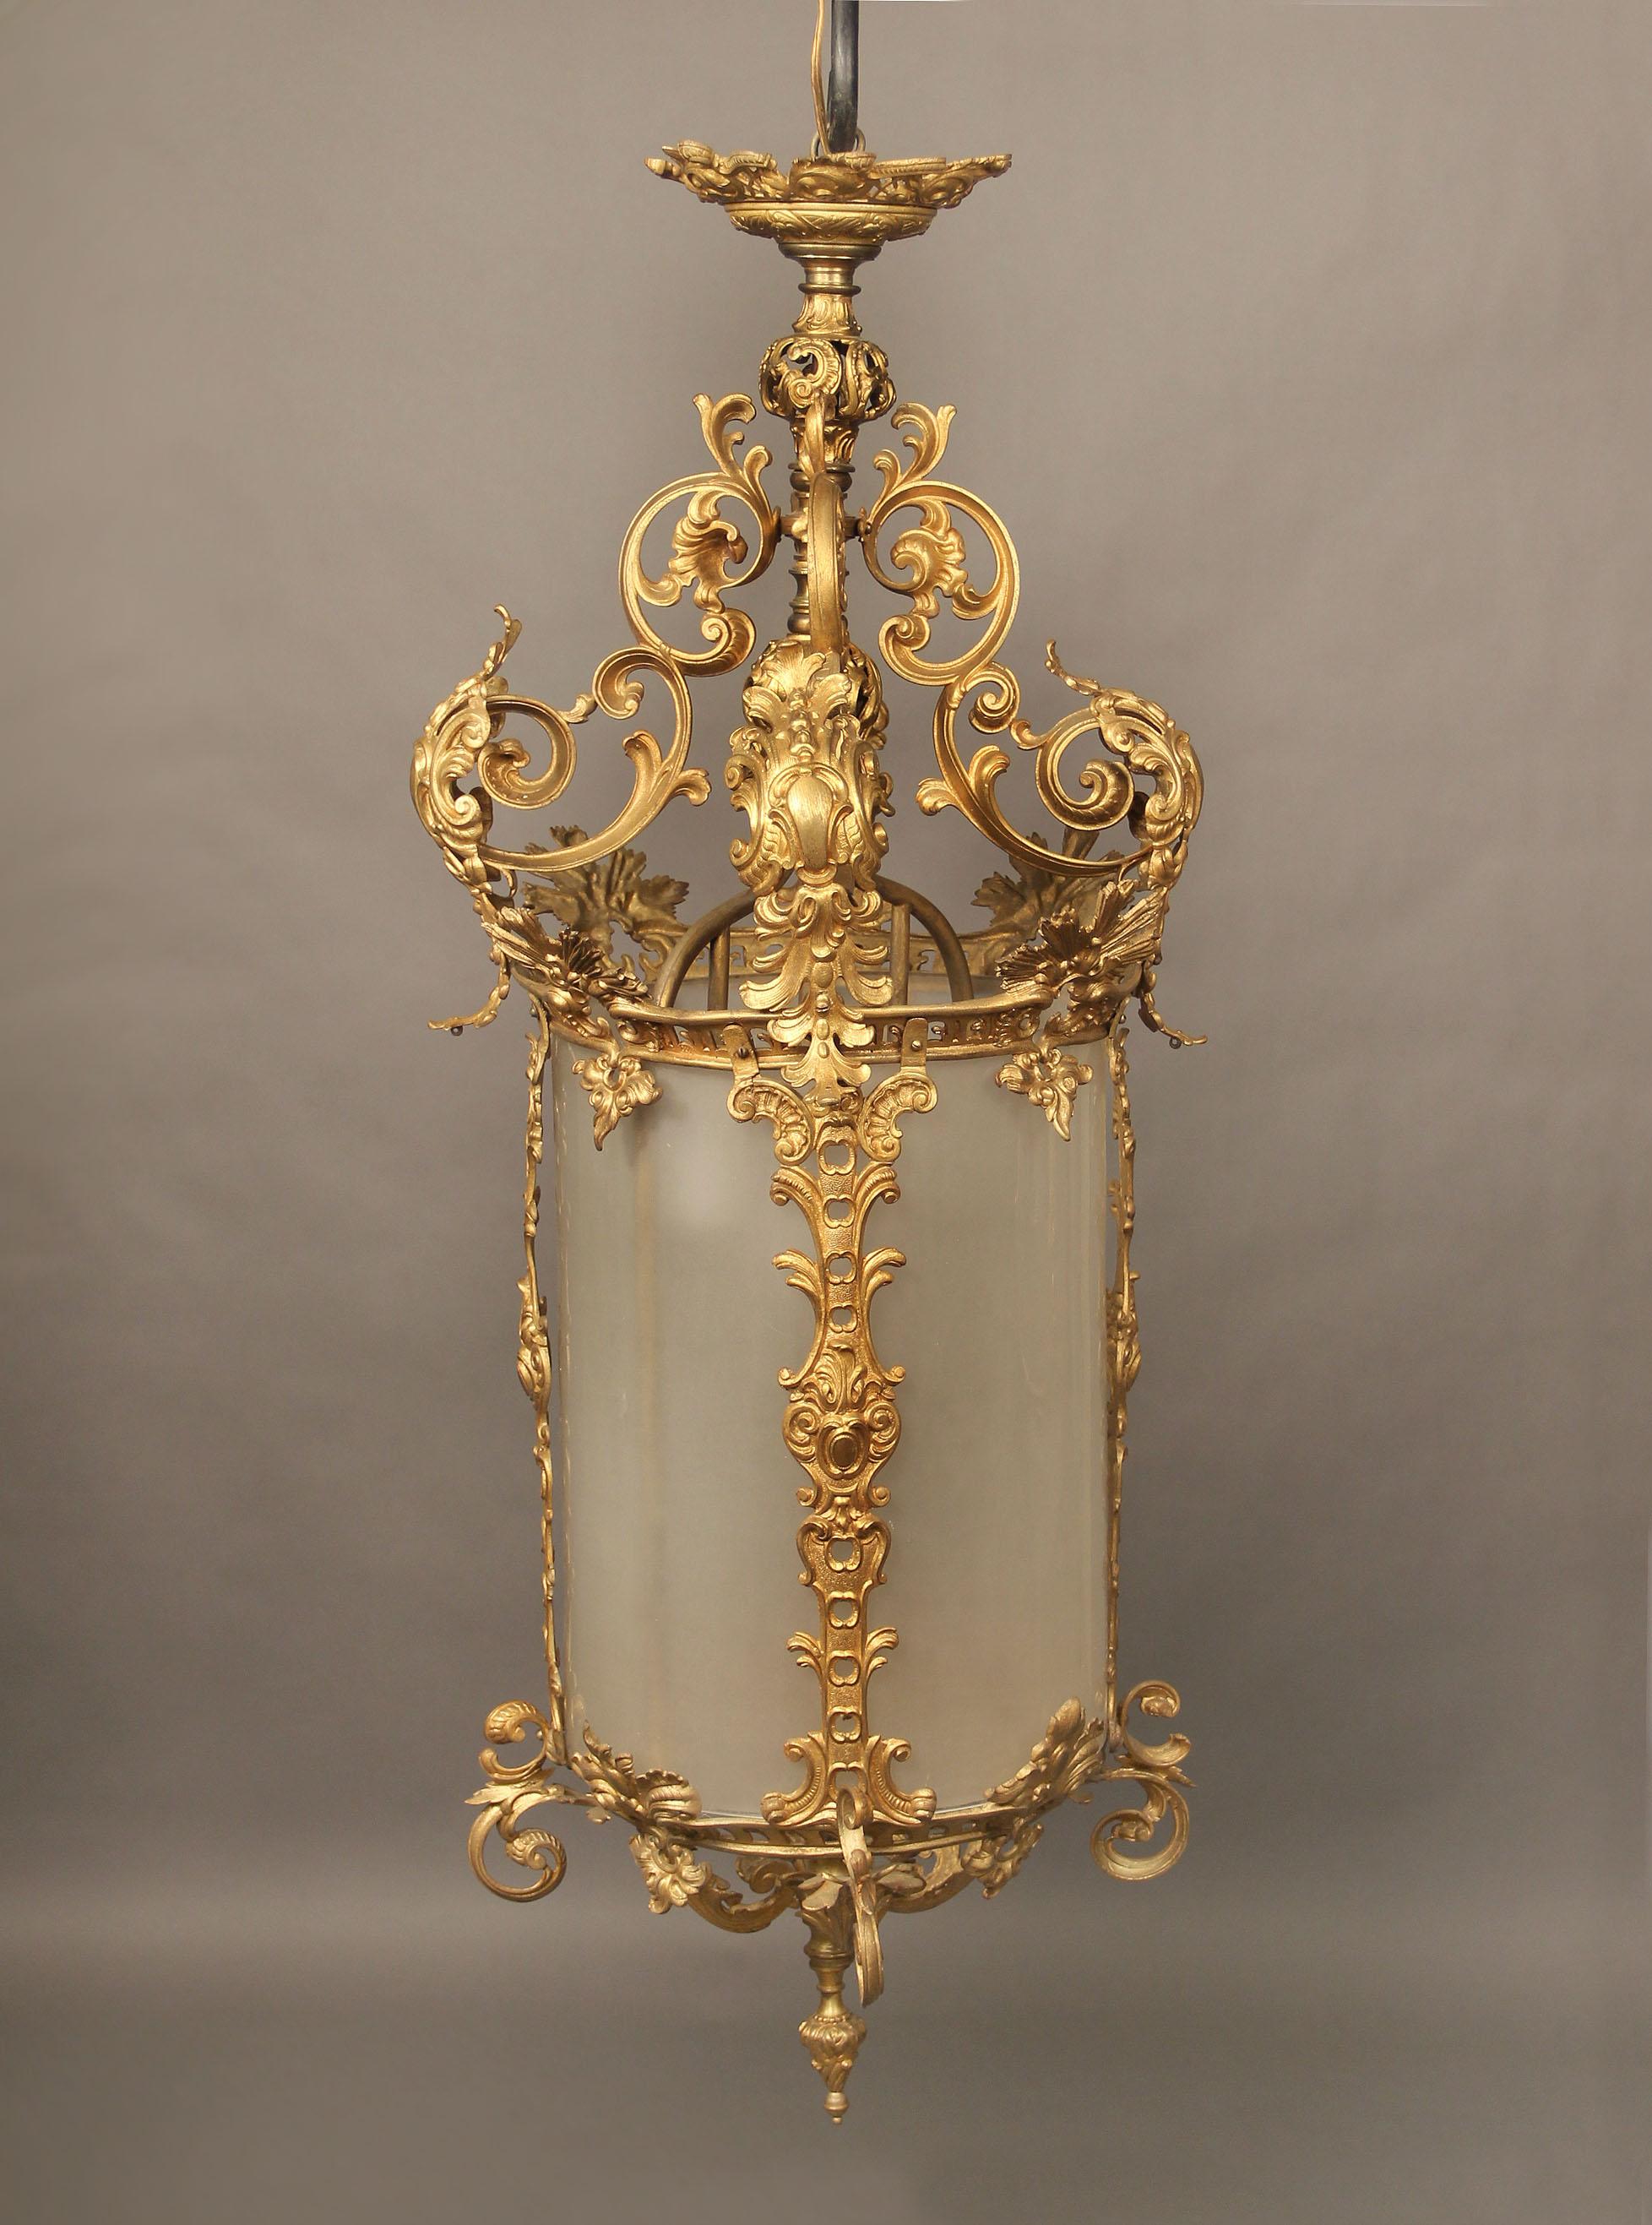 An early 20th century gilt bronze and glass lantern

with wonderful gilt bronze designs, three interior lights.